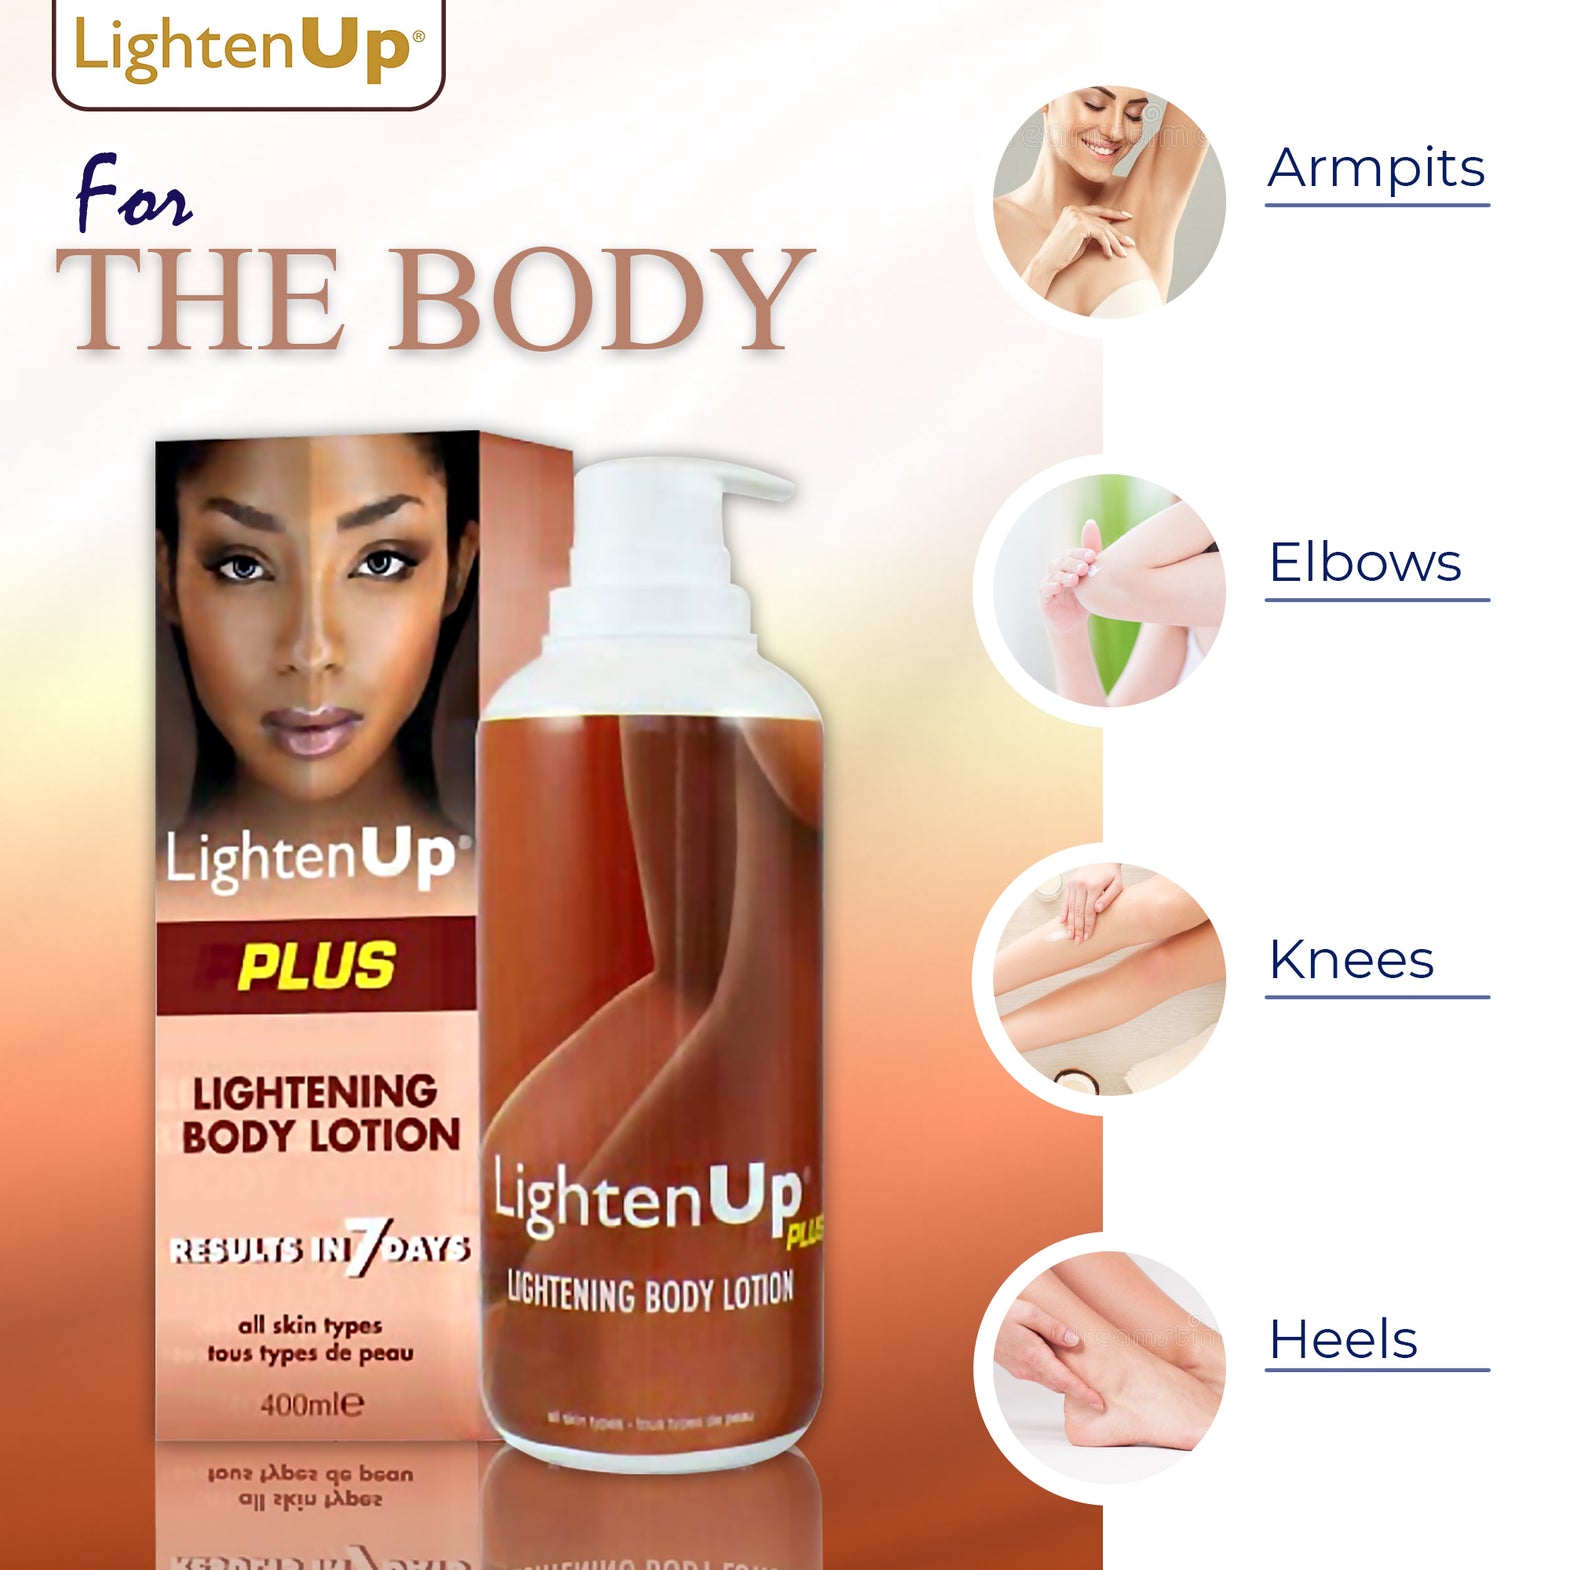 LightenUp Plus Lightening Body Lotion Result In 7 Days 400ml